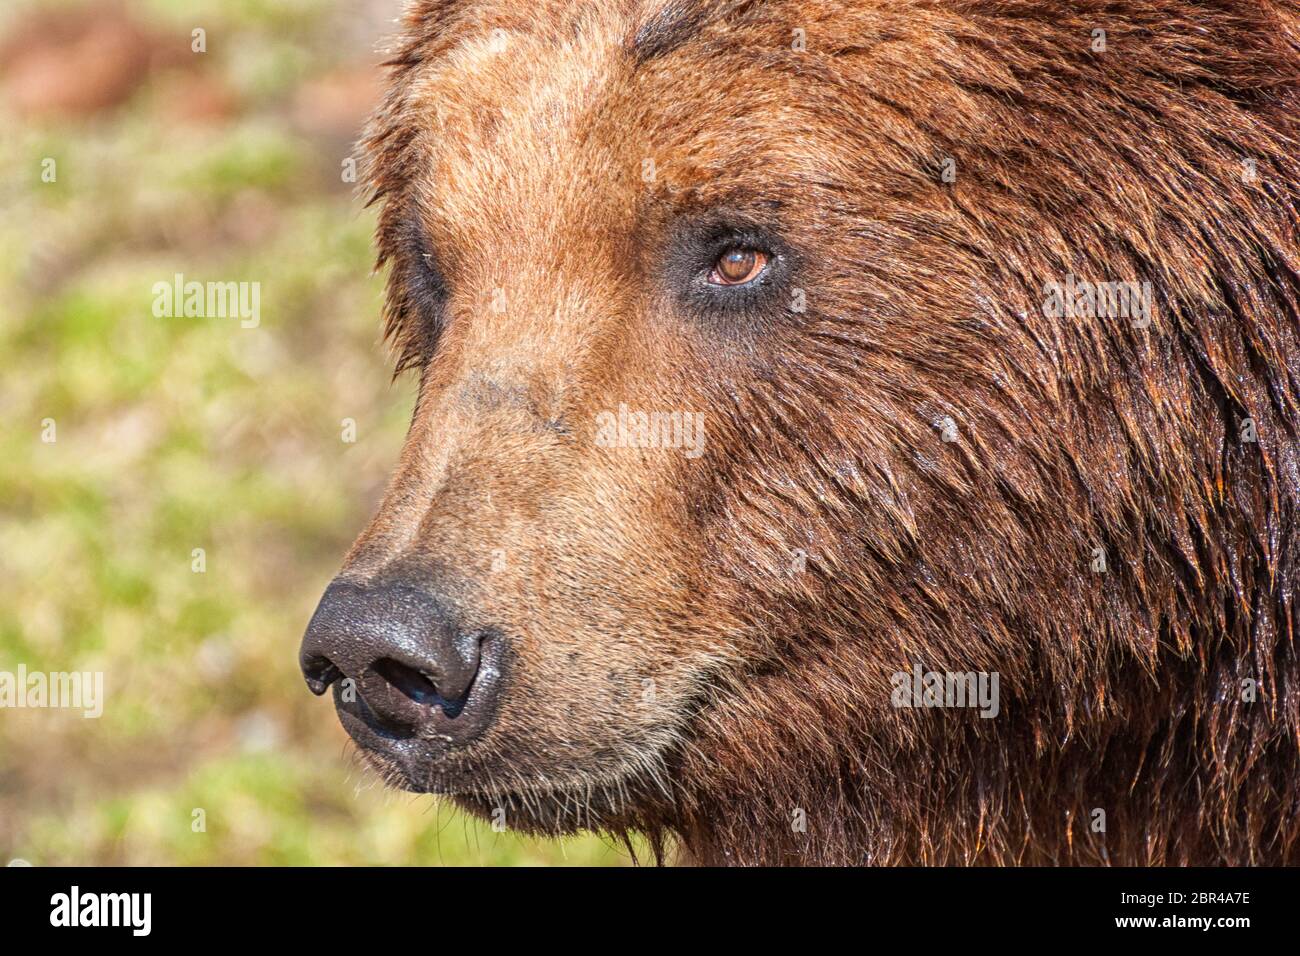 The head of a Kamchatka bear Stock Photo